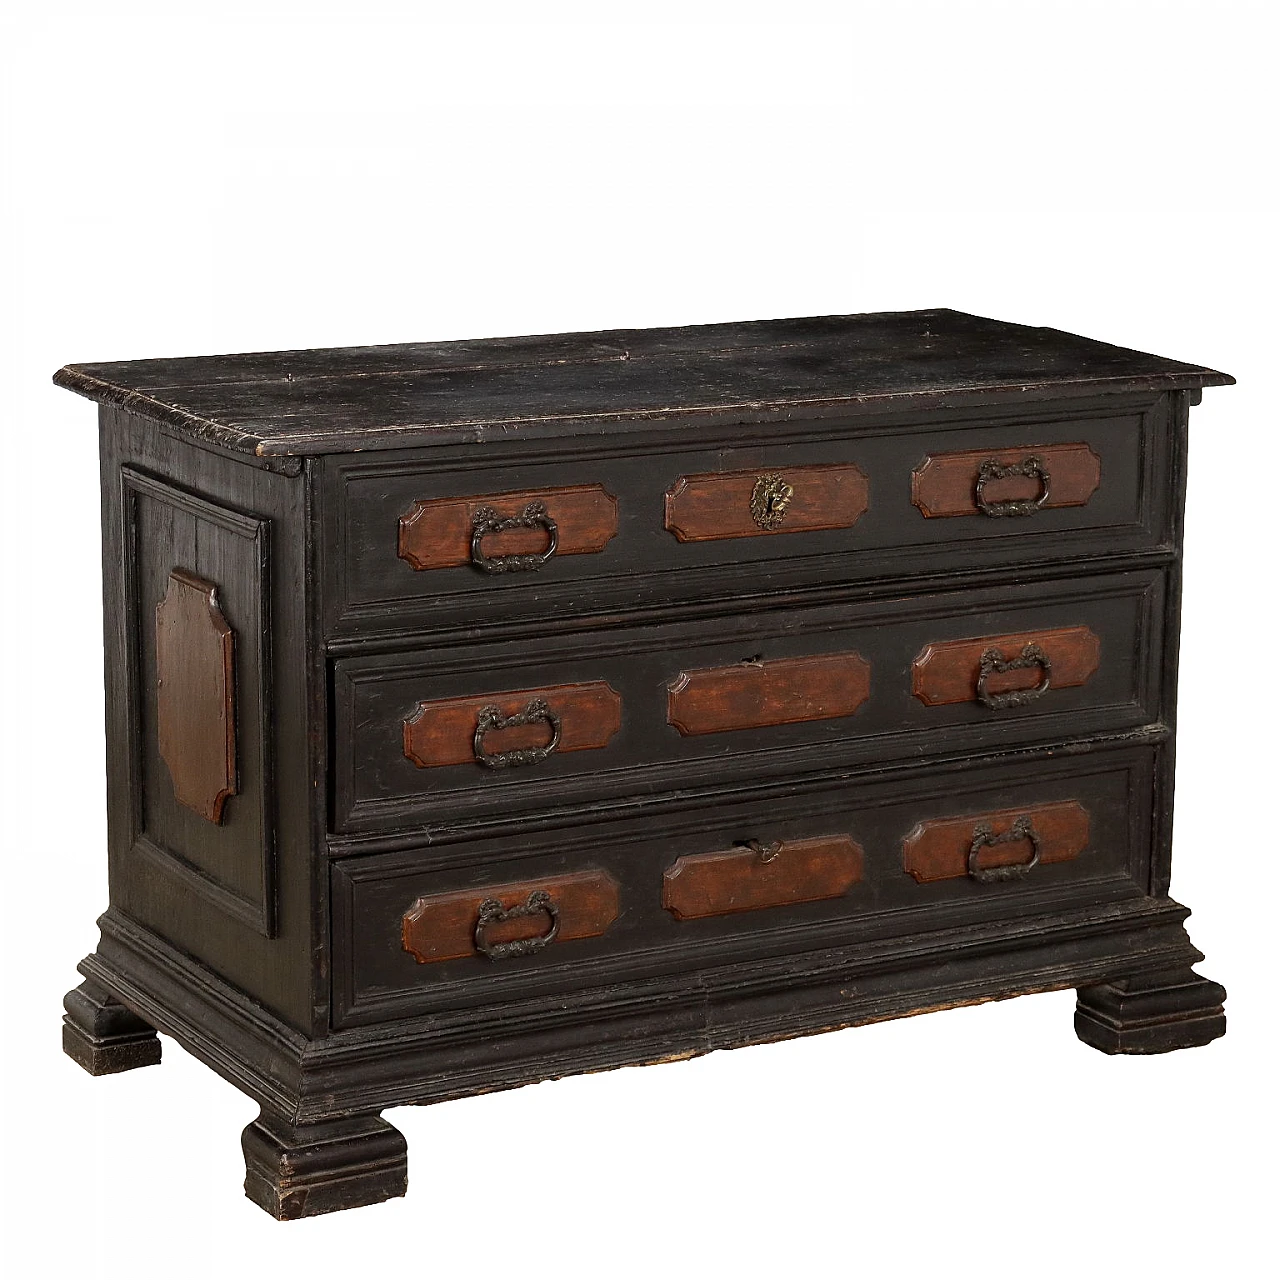 Poplar dresser with shelf feet, drawers and flap top, 18th century 1